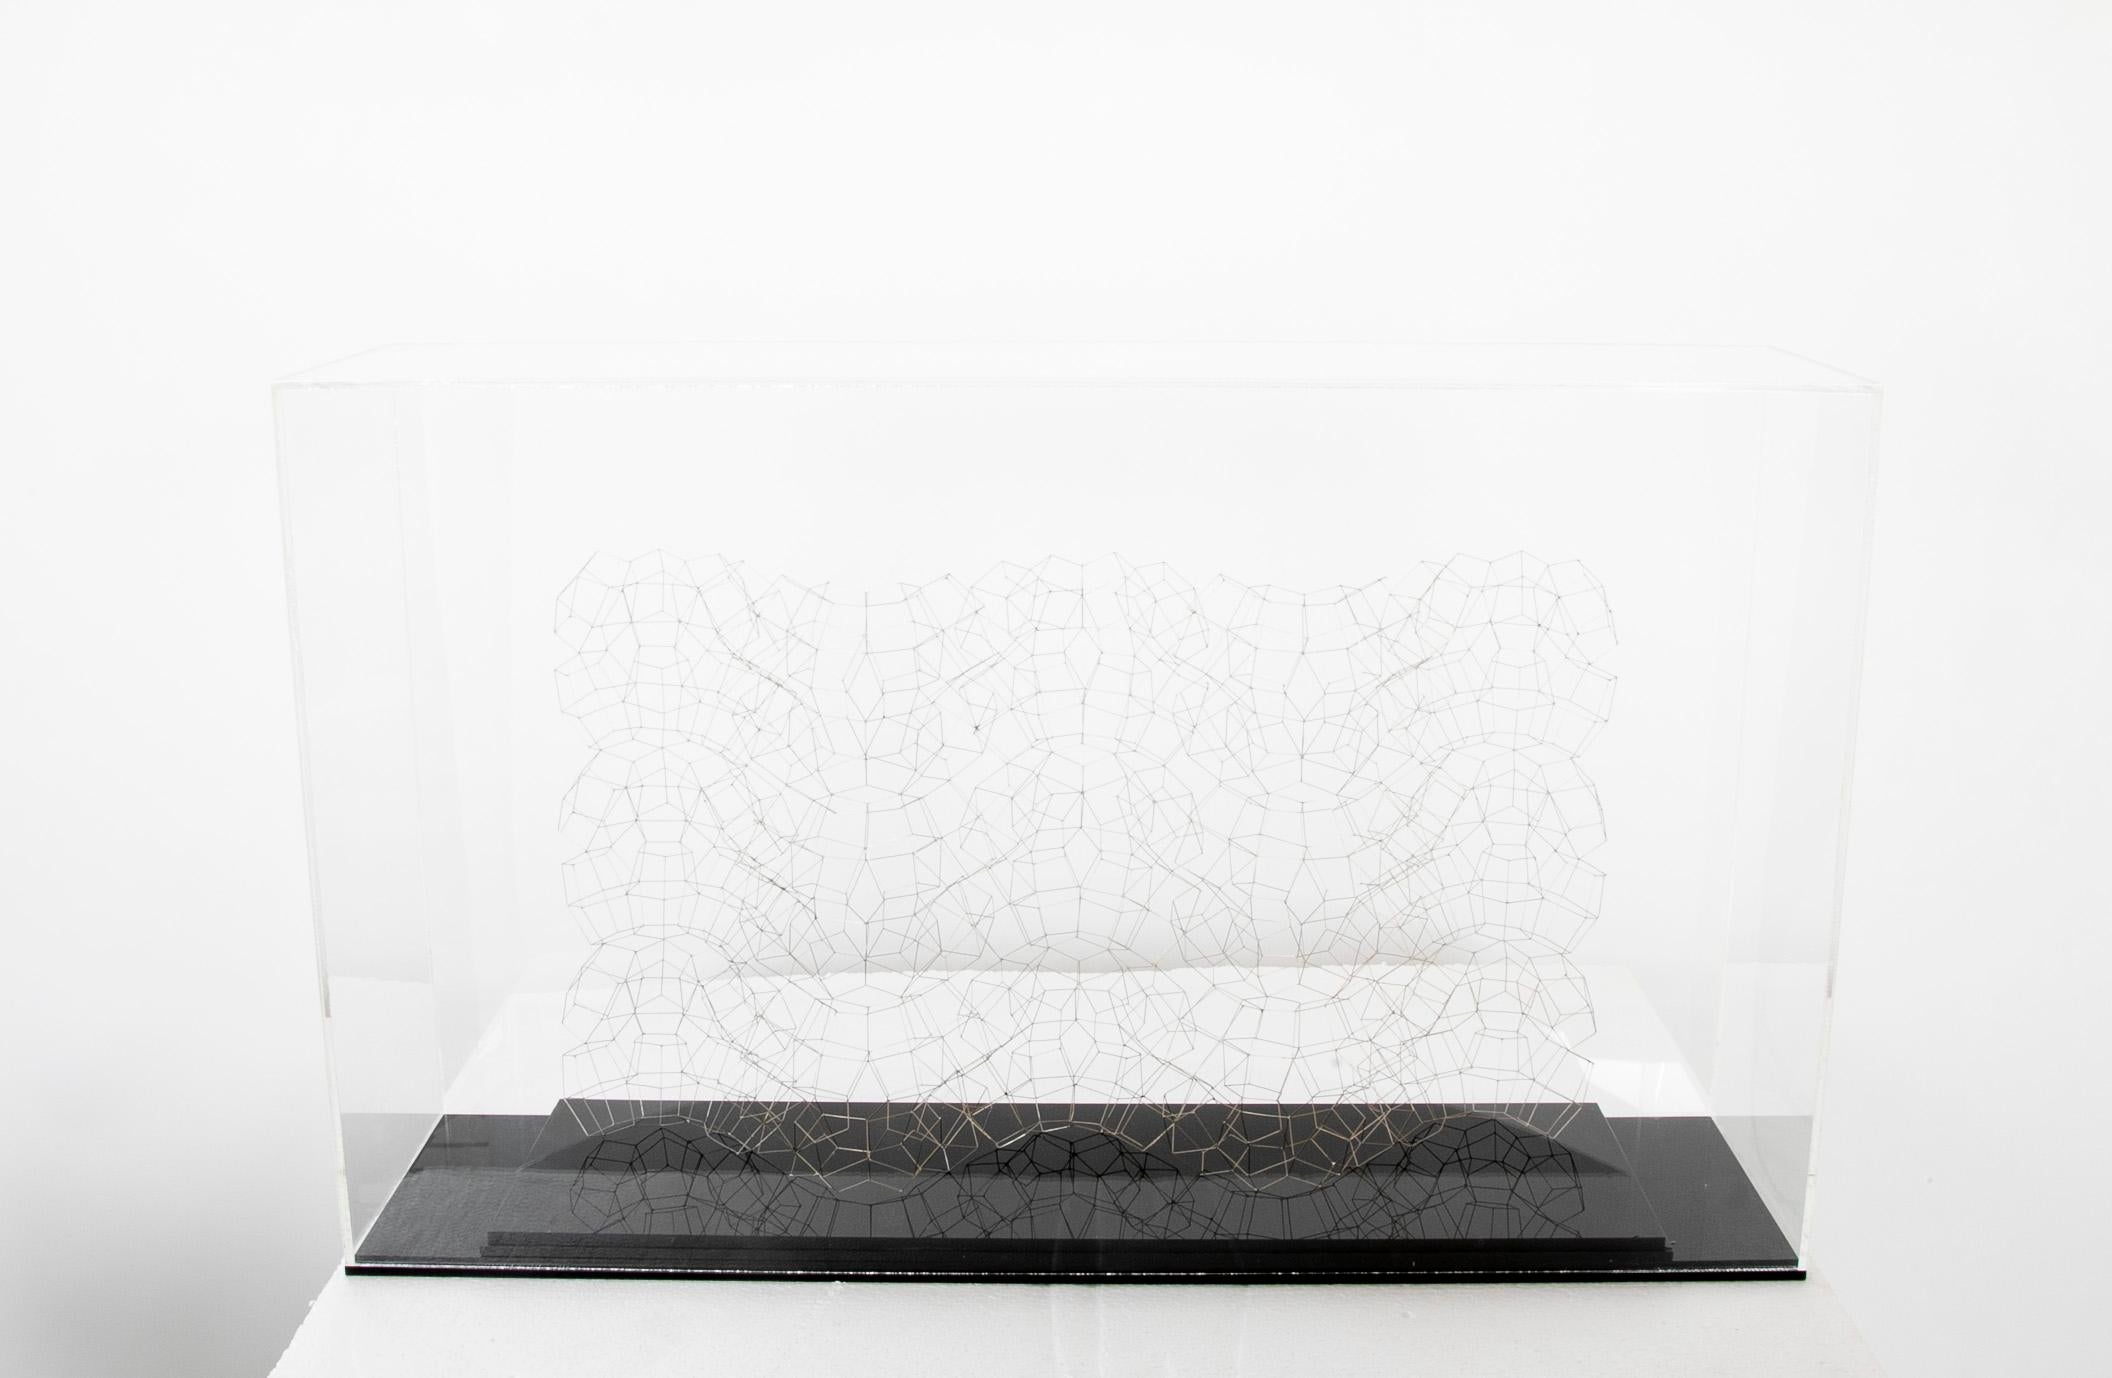 A soldered wire sculpture under plexiglass vitrine by American sculptor Marilynn Gelfman-Karp.
Signed and dated. 
Sculpture size - 15